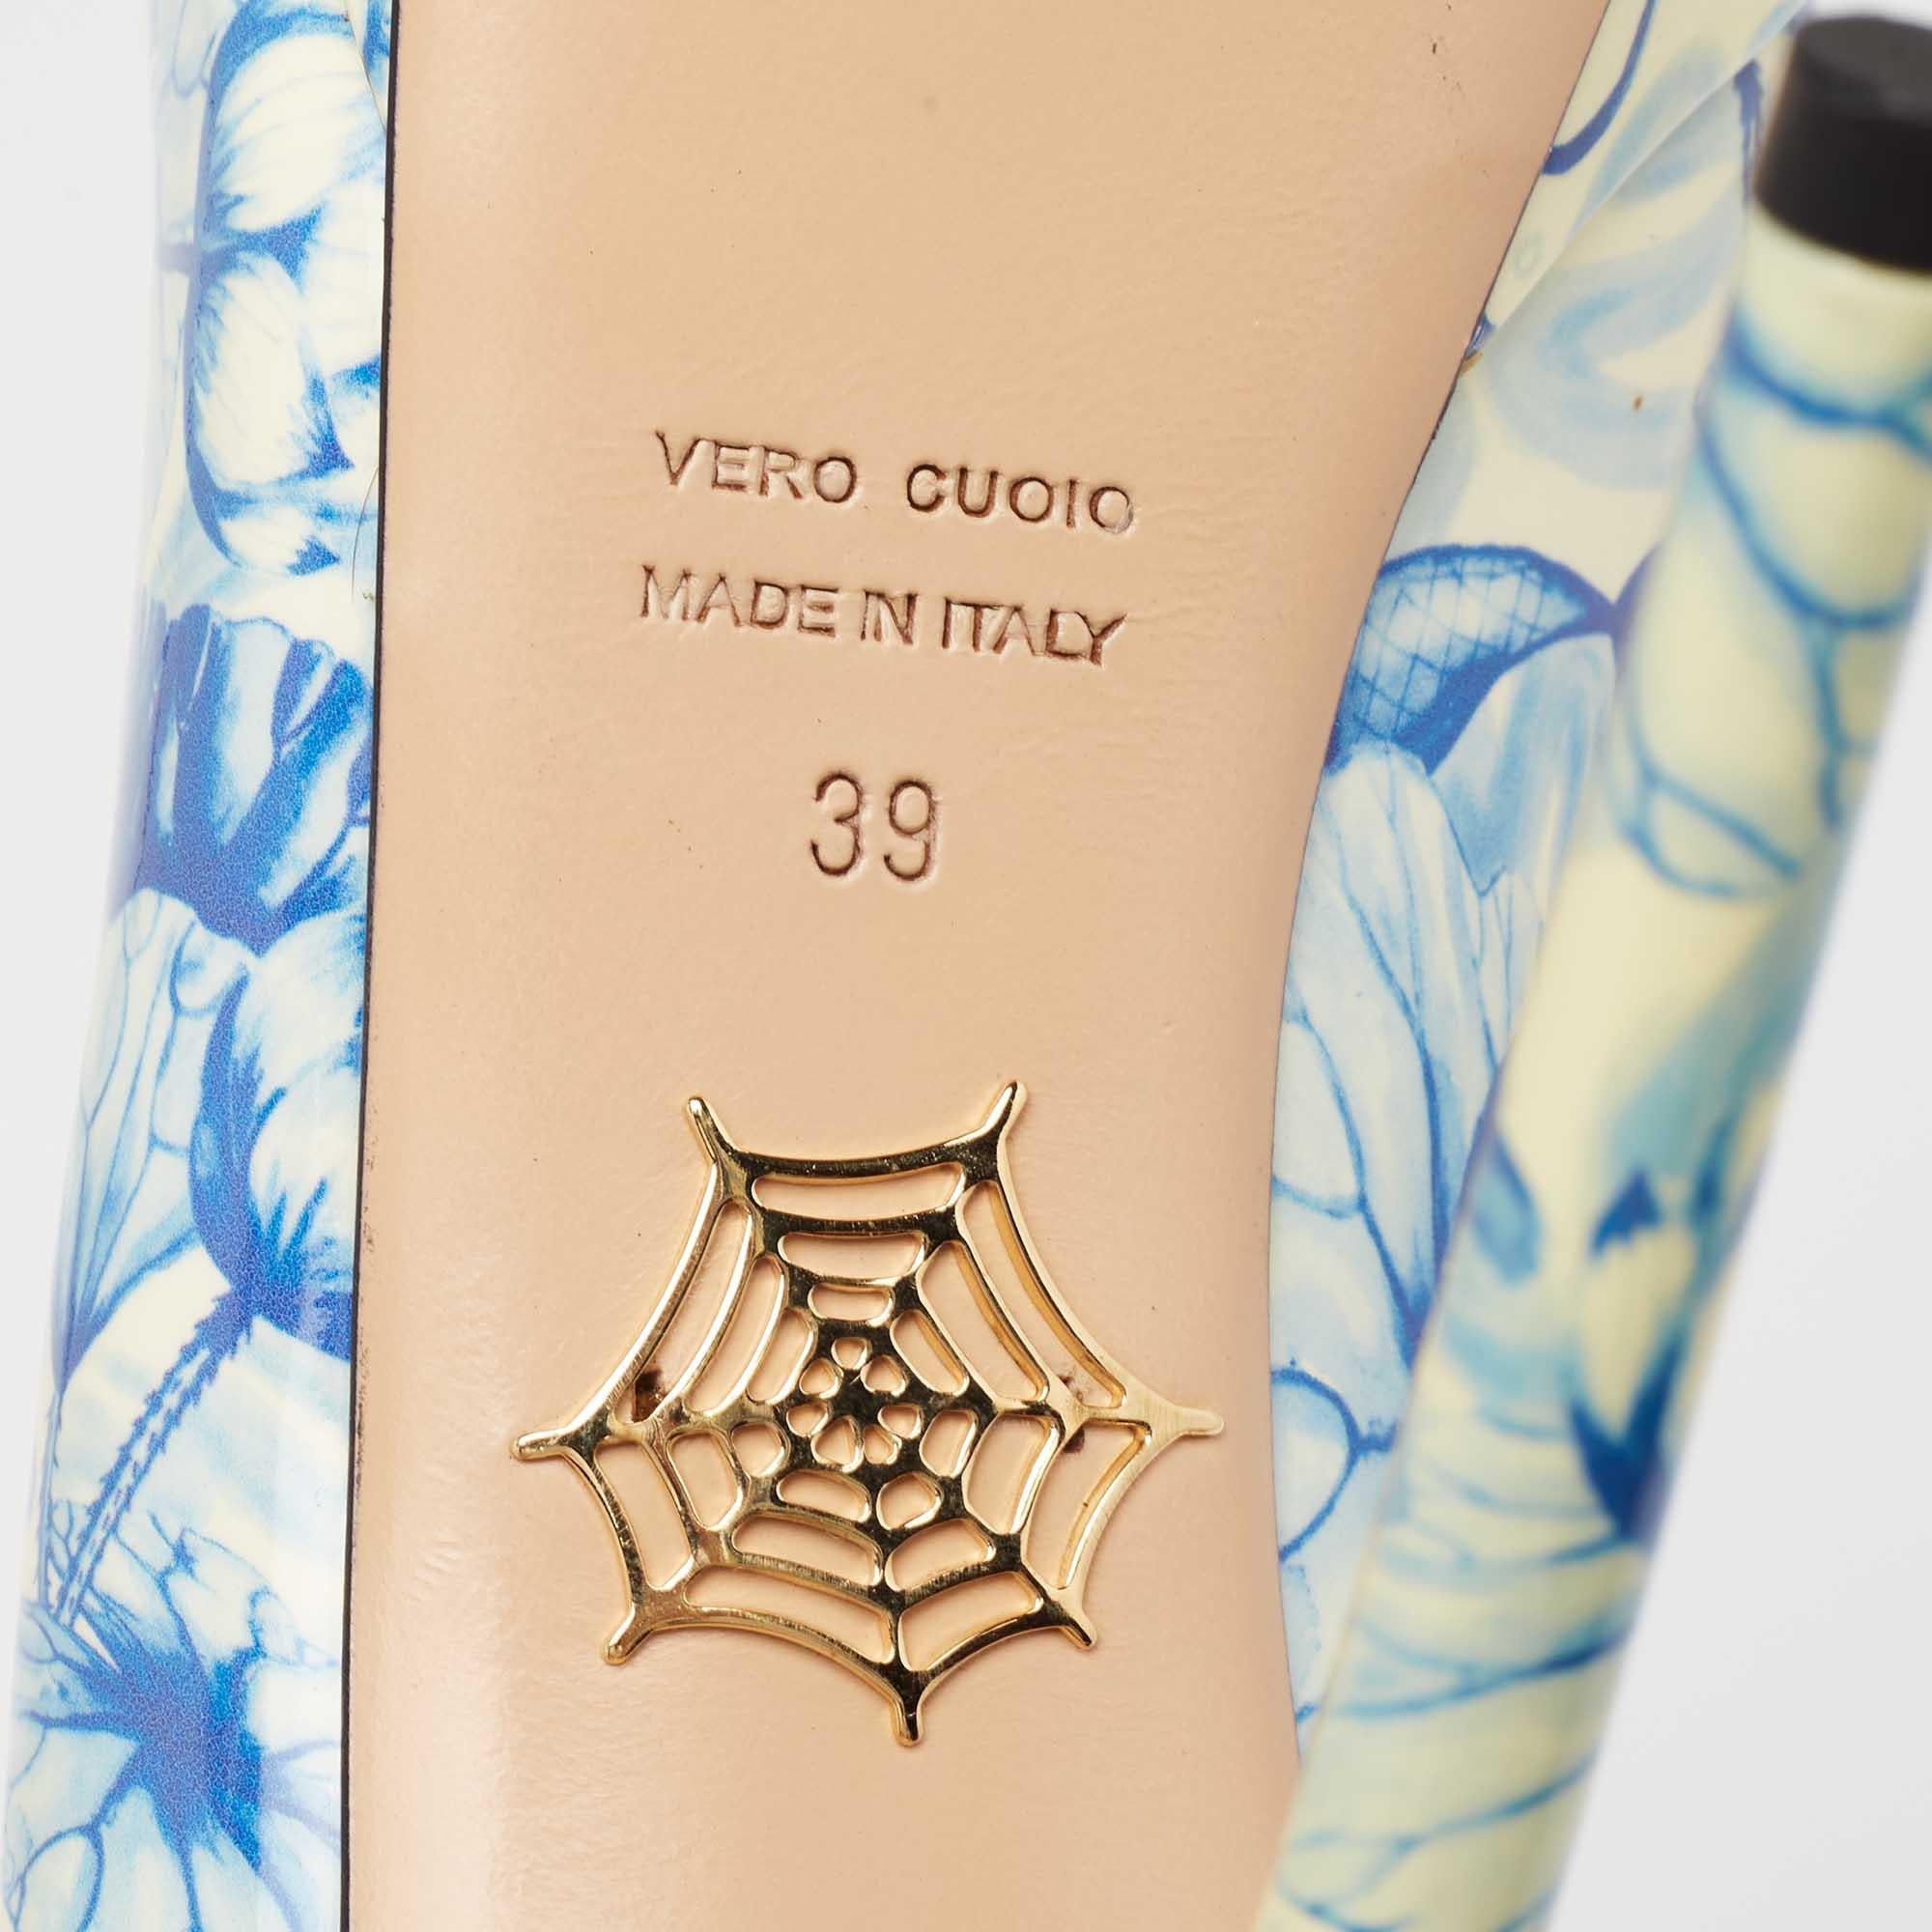 Charlotte Olympia Ming Koi Carp Print Patent Leather Ankle Strap Pump Size 39 In Excellent Condition For Sale In Dubai, Al Qouz 2